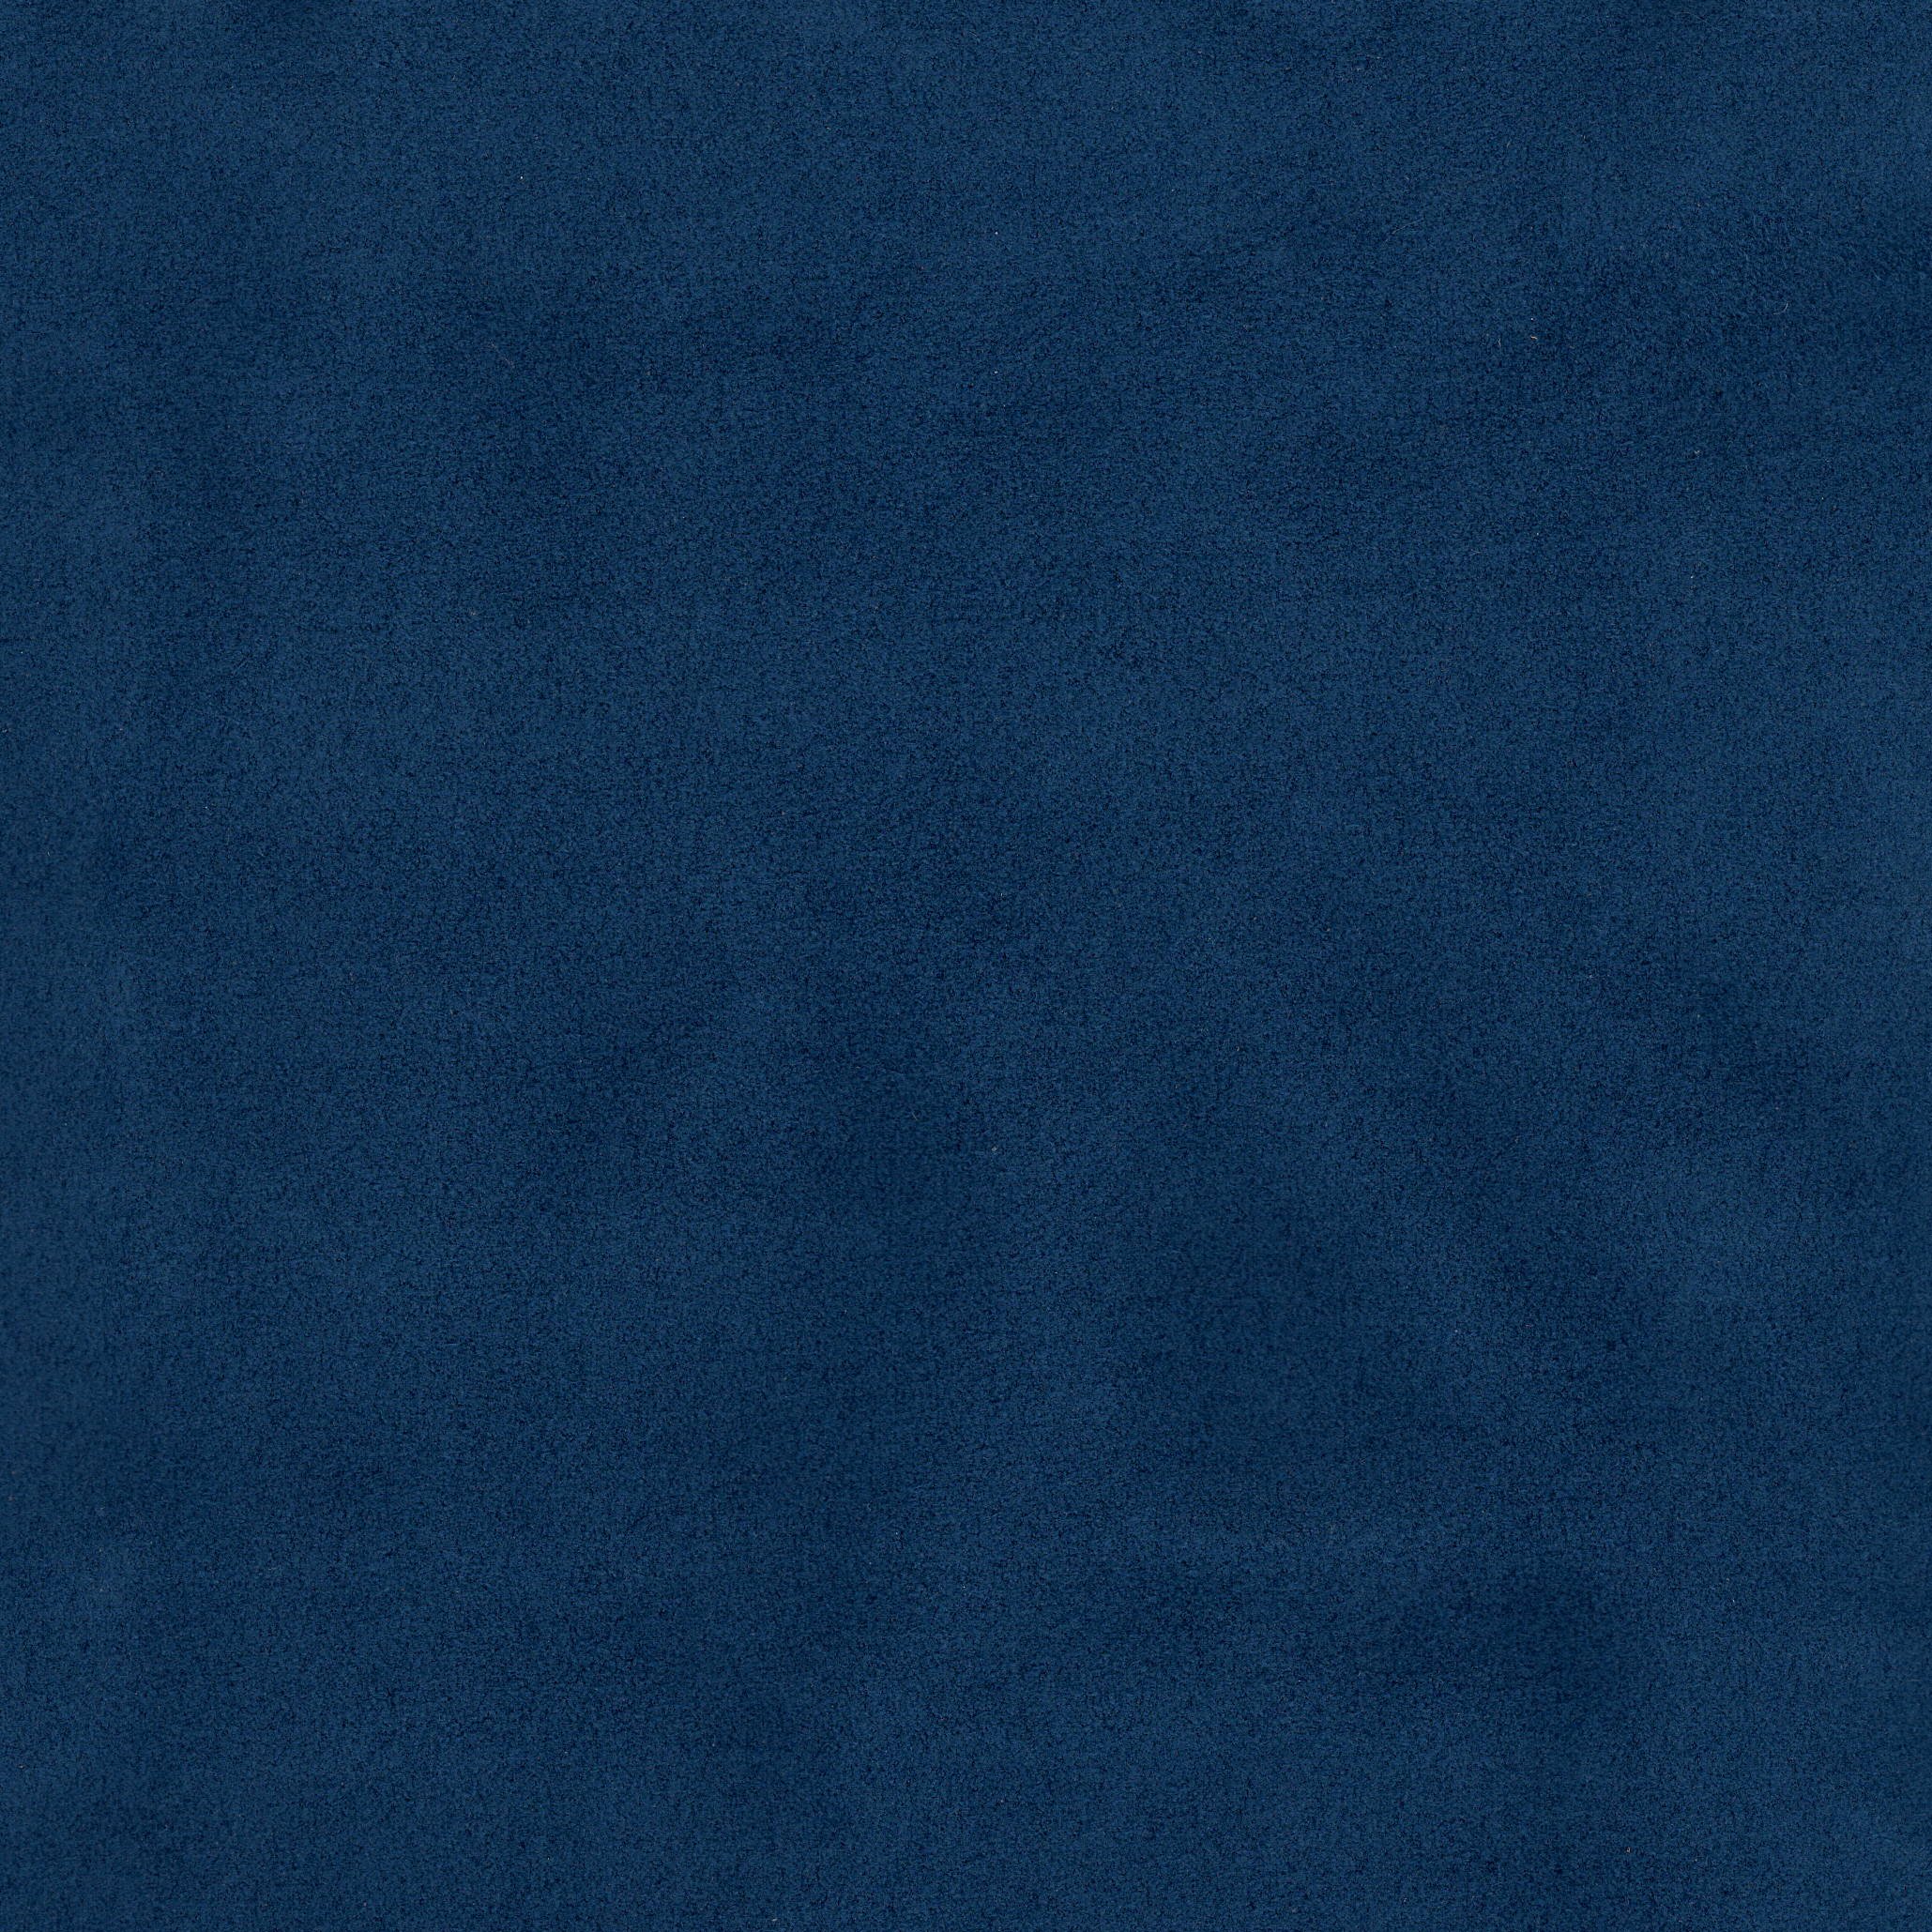 Ultrasuede - 2877 Cobalt Blue (Copy)